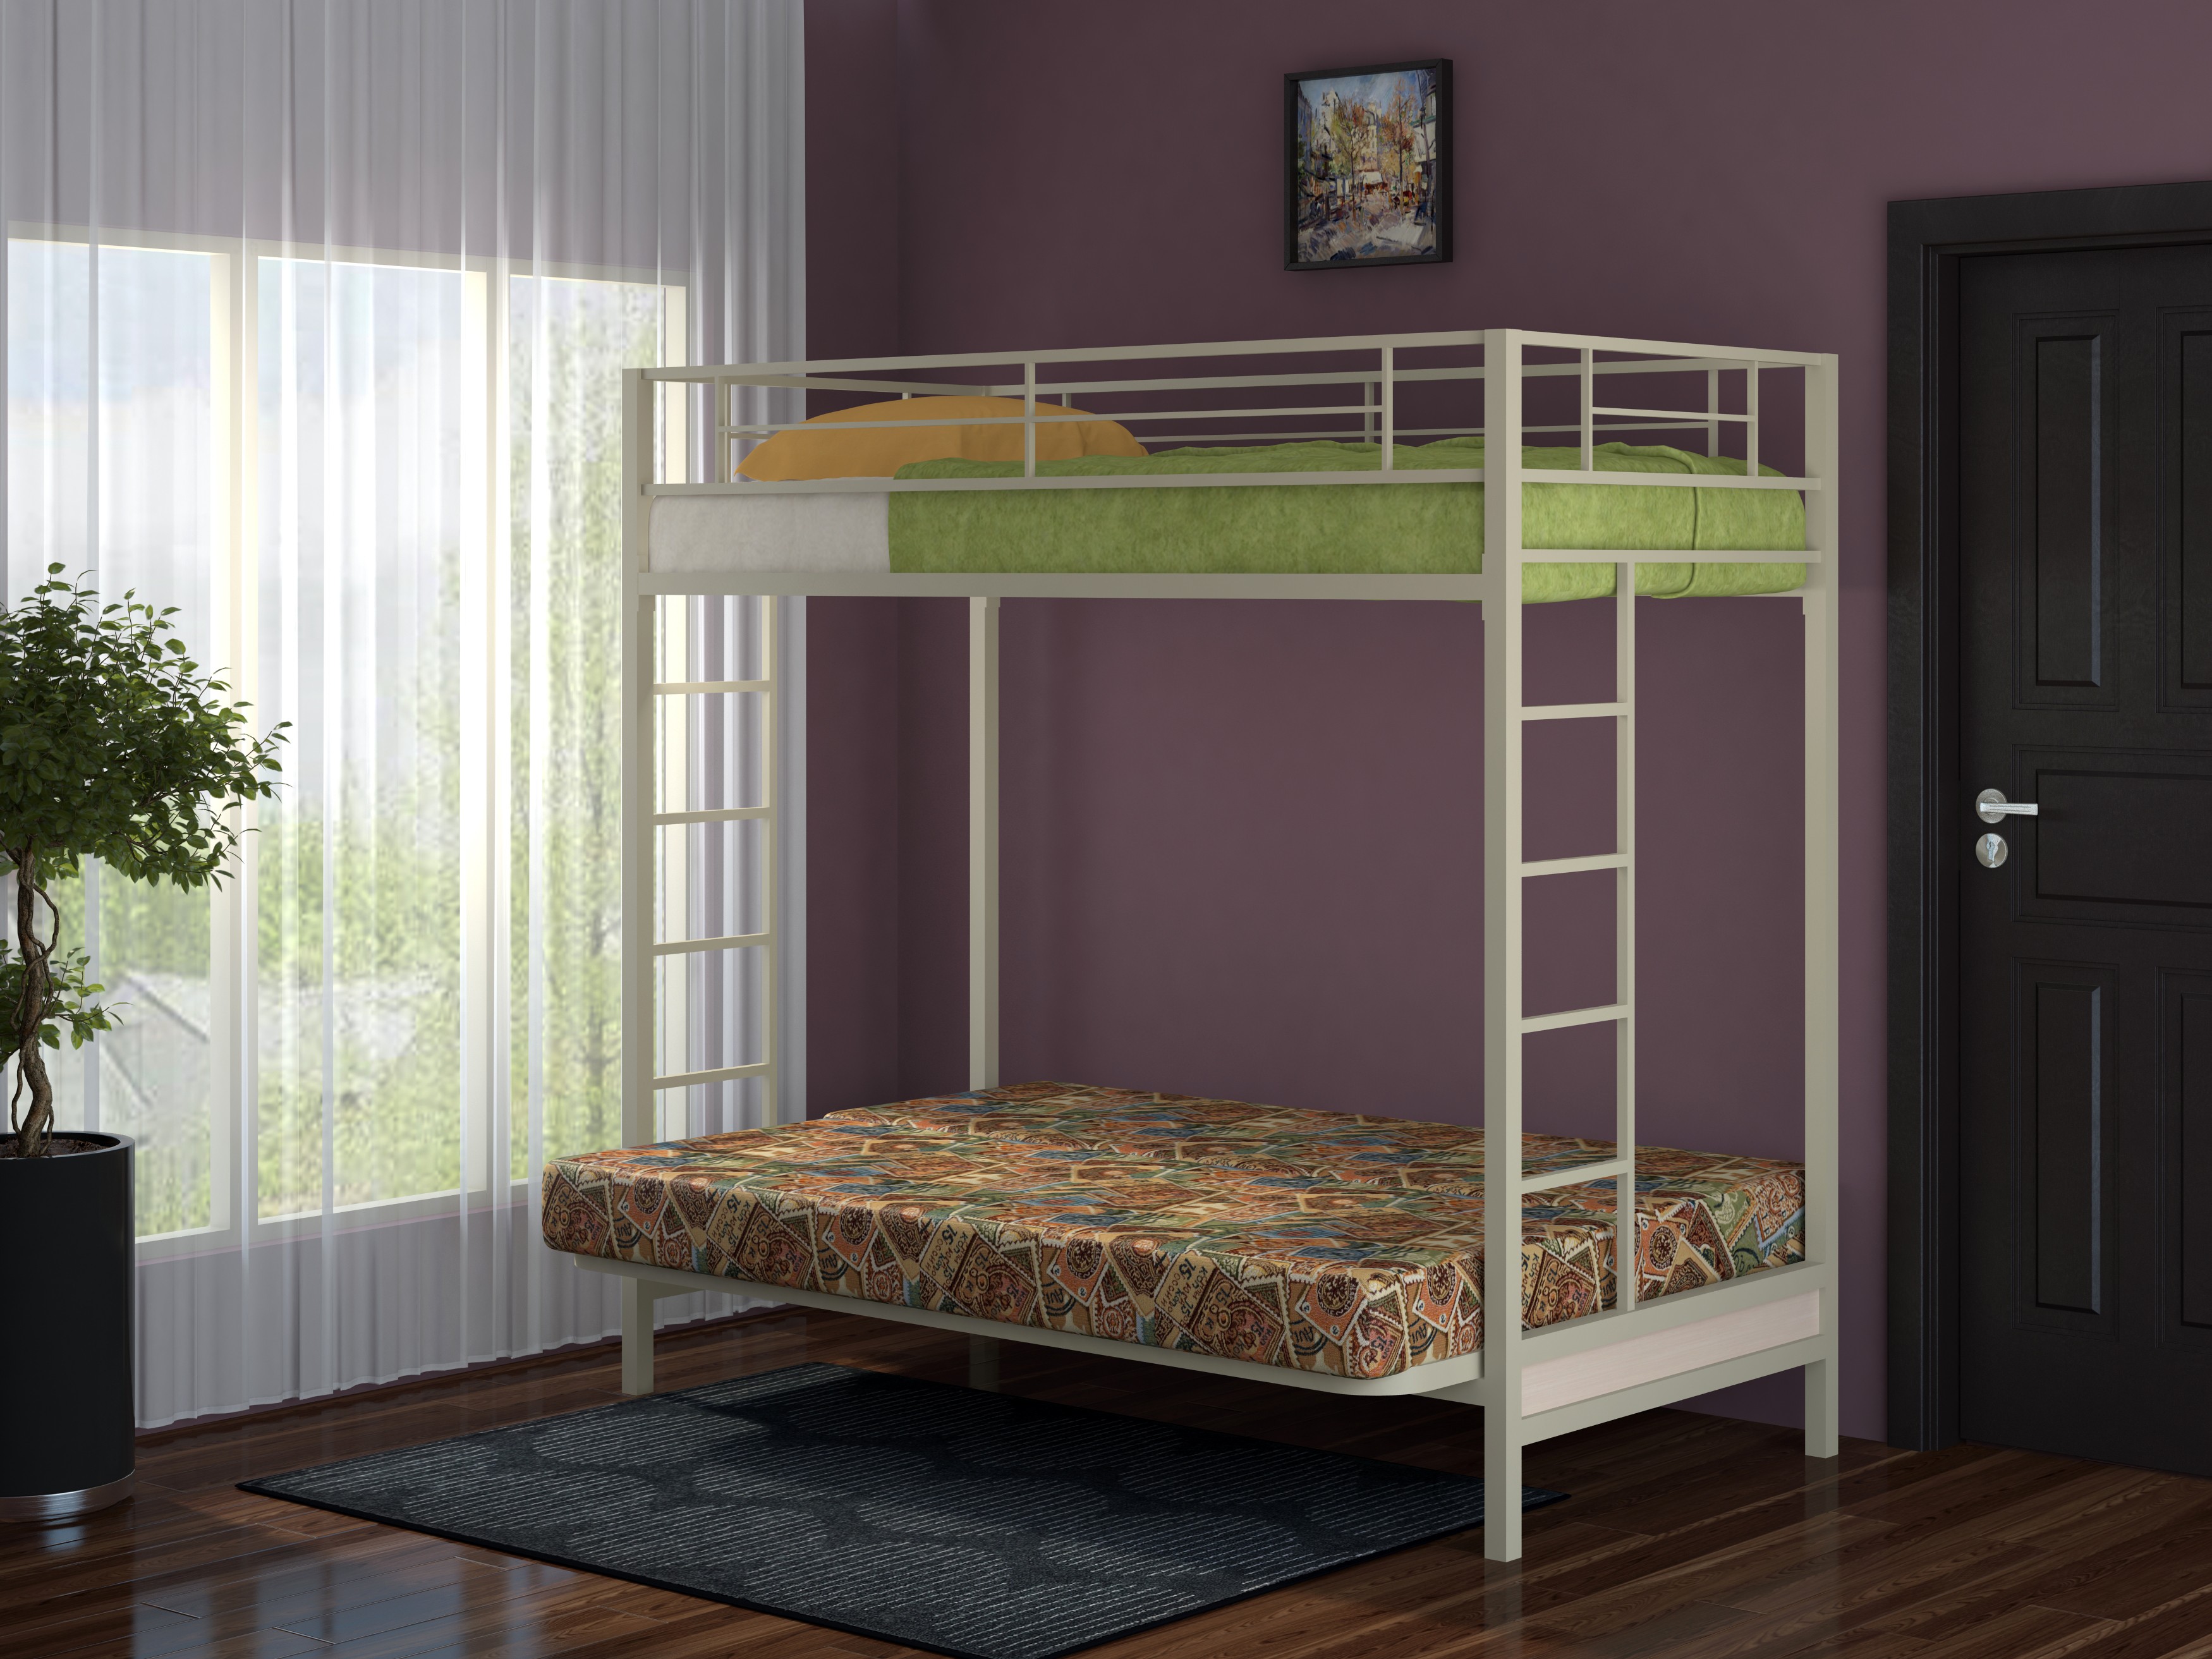 Двухъярусные диван кровати спб. Кровать двухъярусная Лером кр-123. Фламинго кровать двухъярусная Боринское.